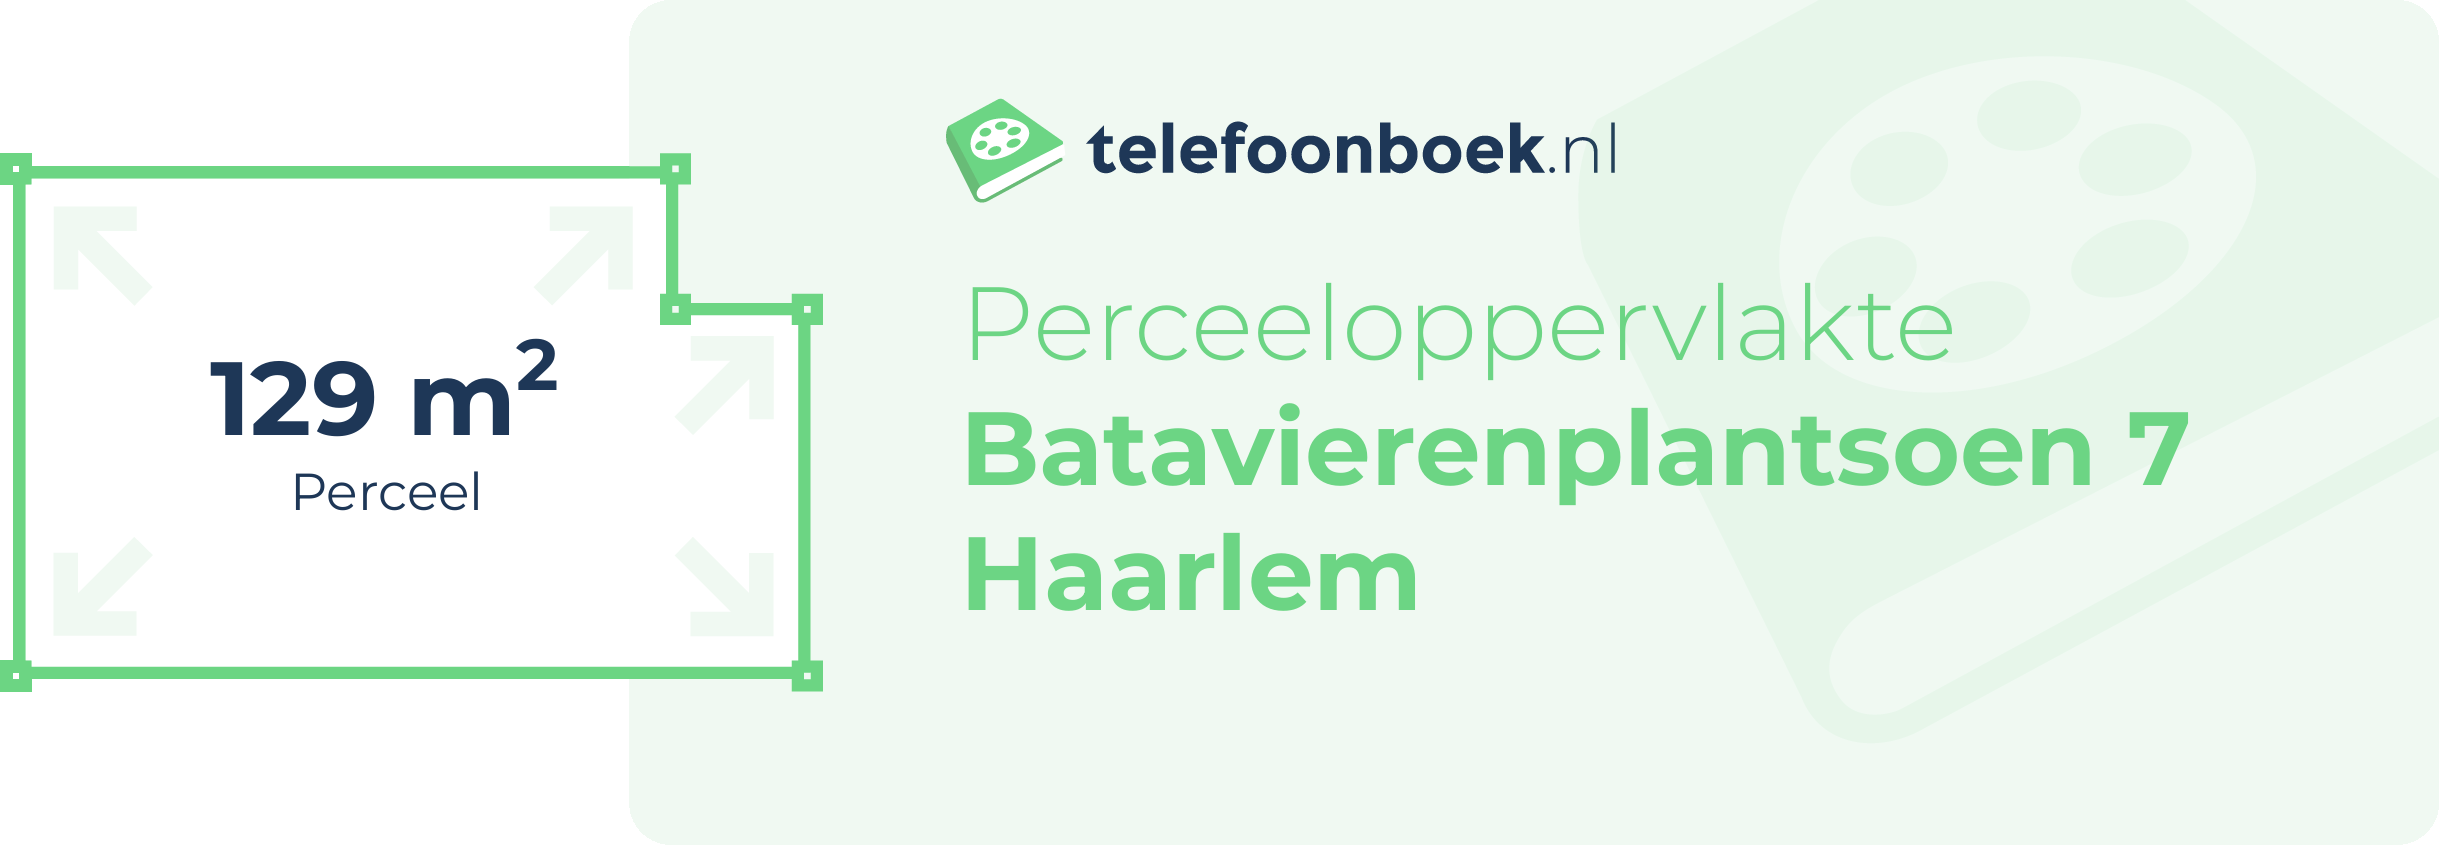 Perceeloppervlakte Batavierenplantsoen 7 Haarlem